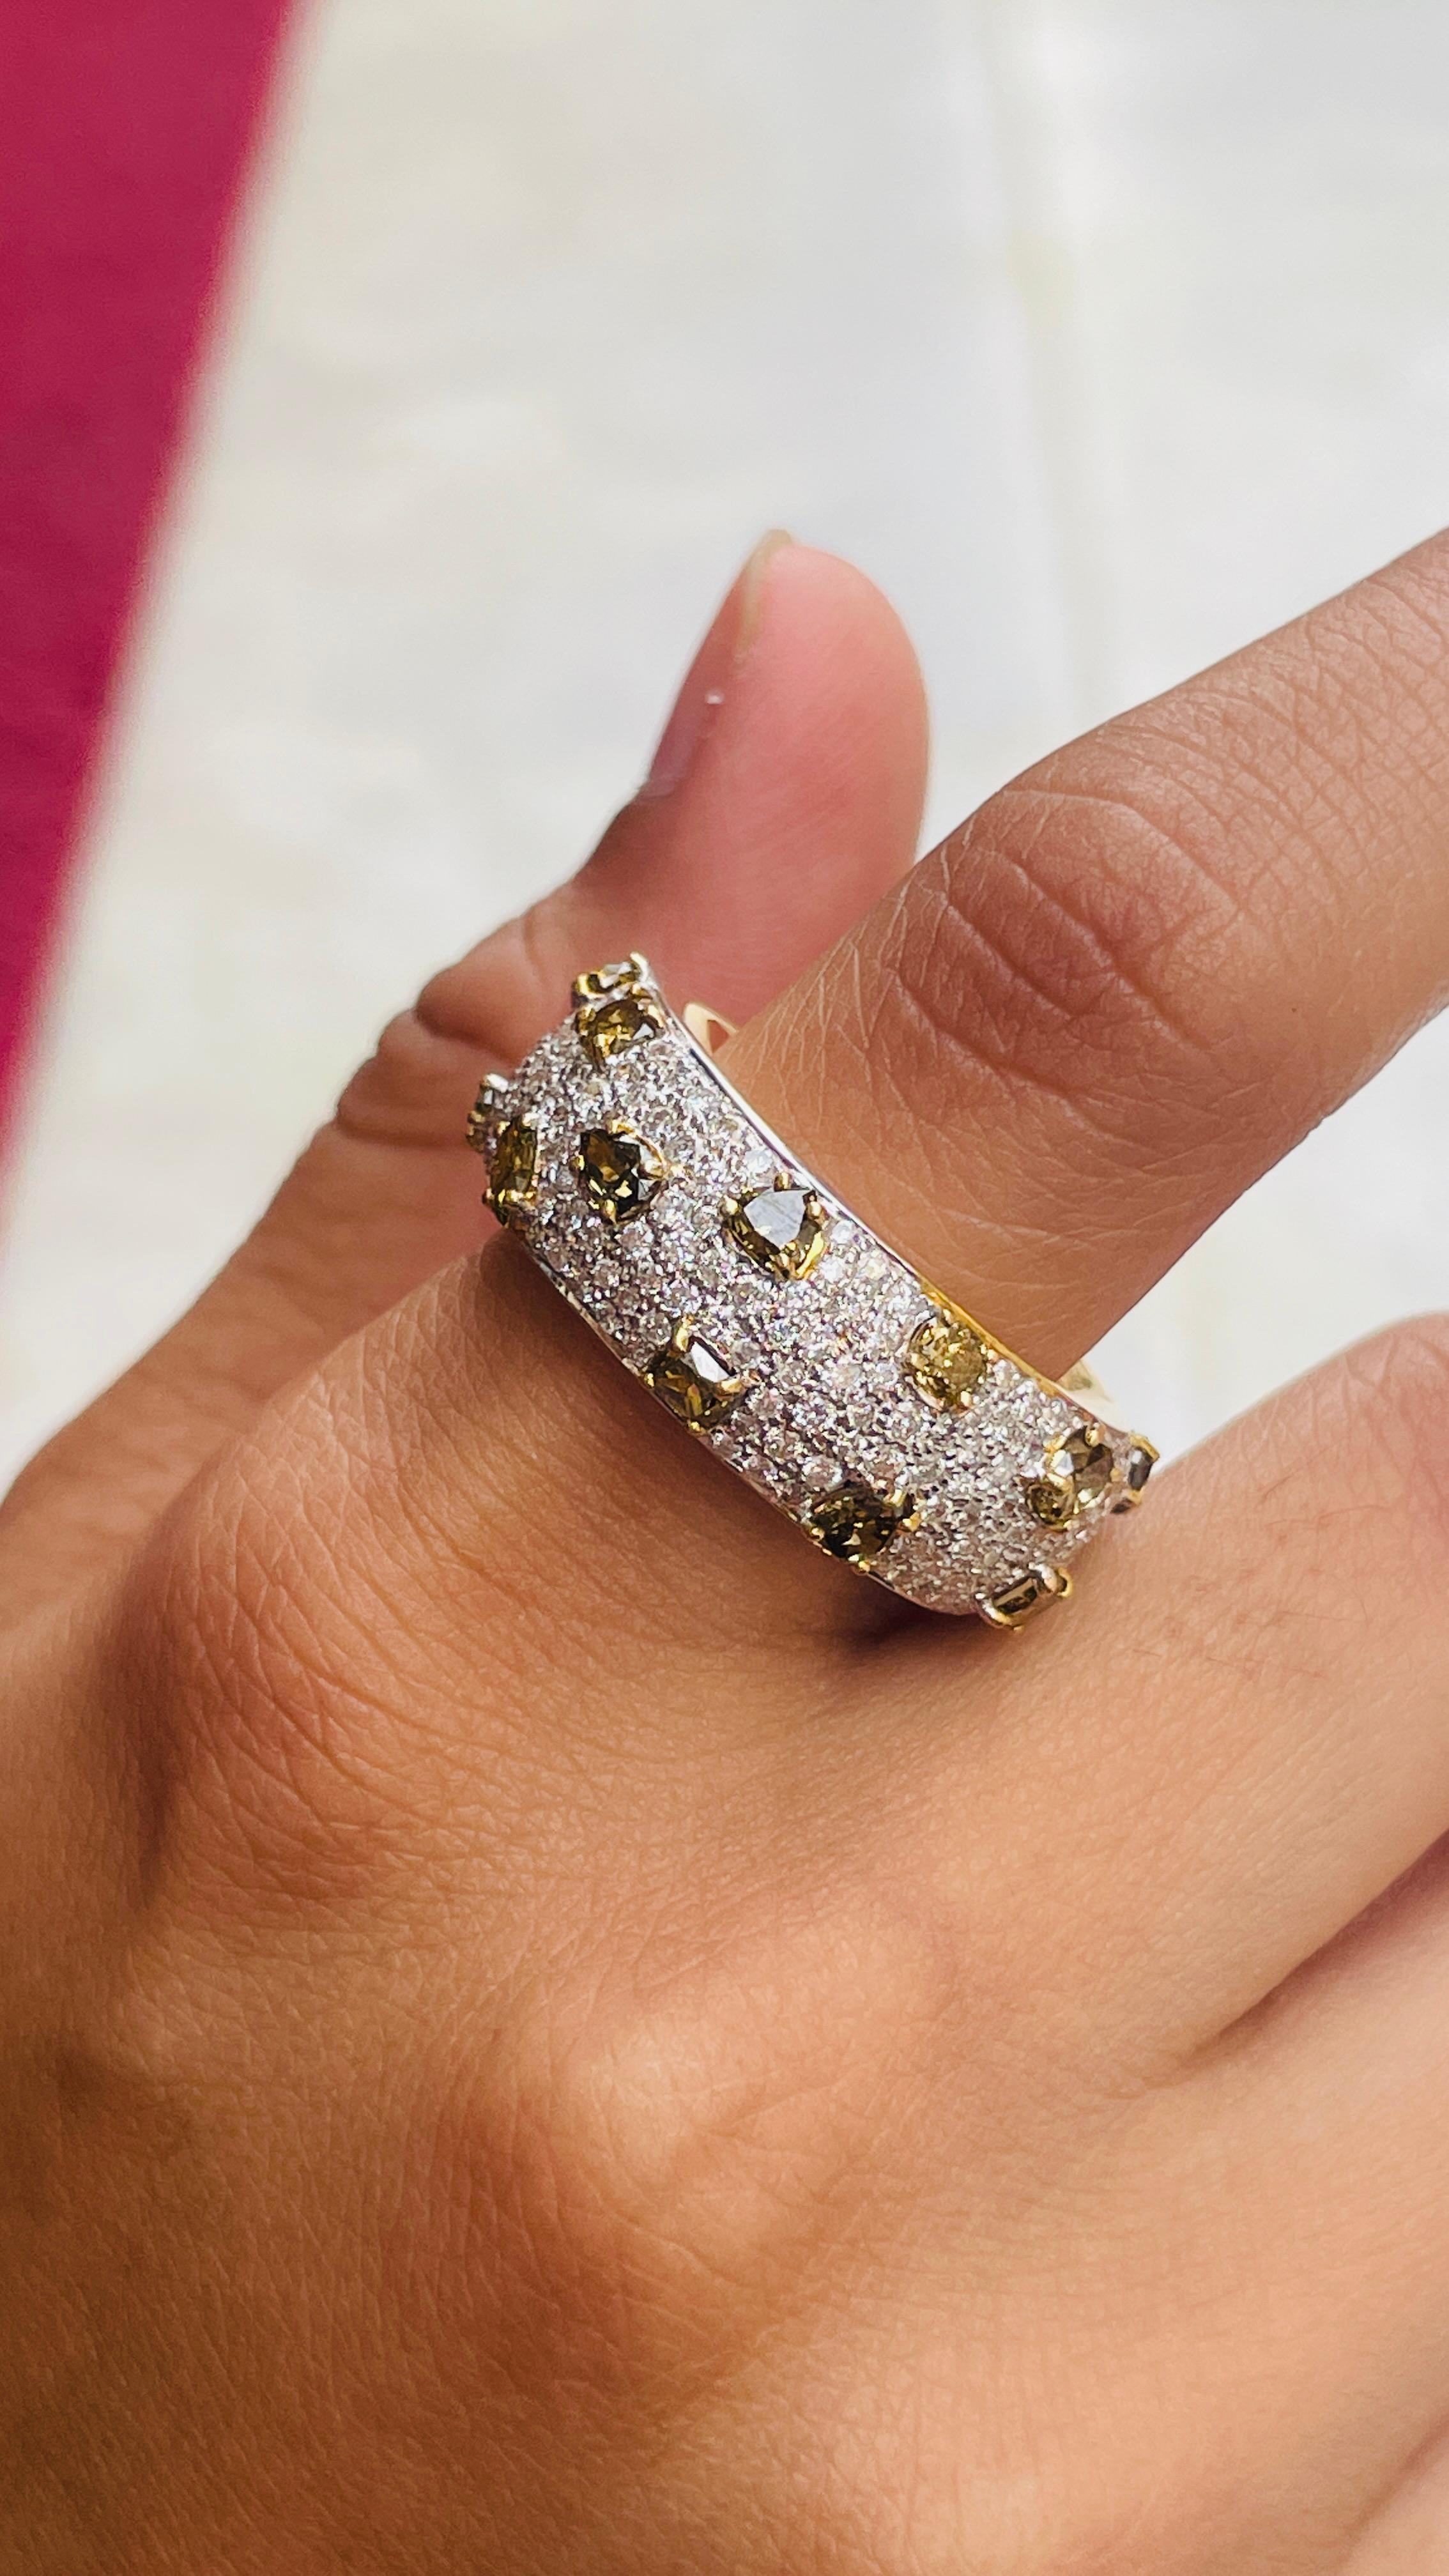 For Sale:  18 Karat Solid Yellow Gold 6.3 Carats Diamond Wedding Band Ring 7